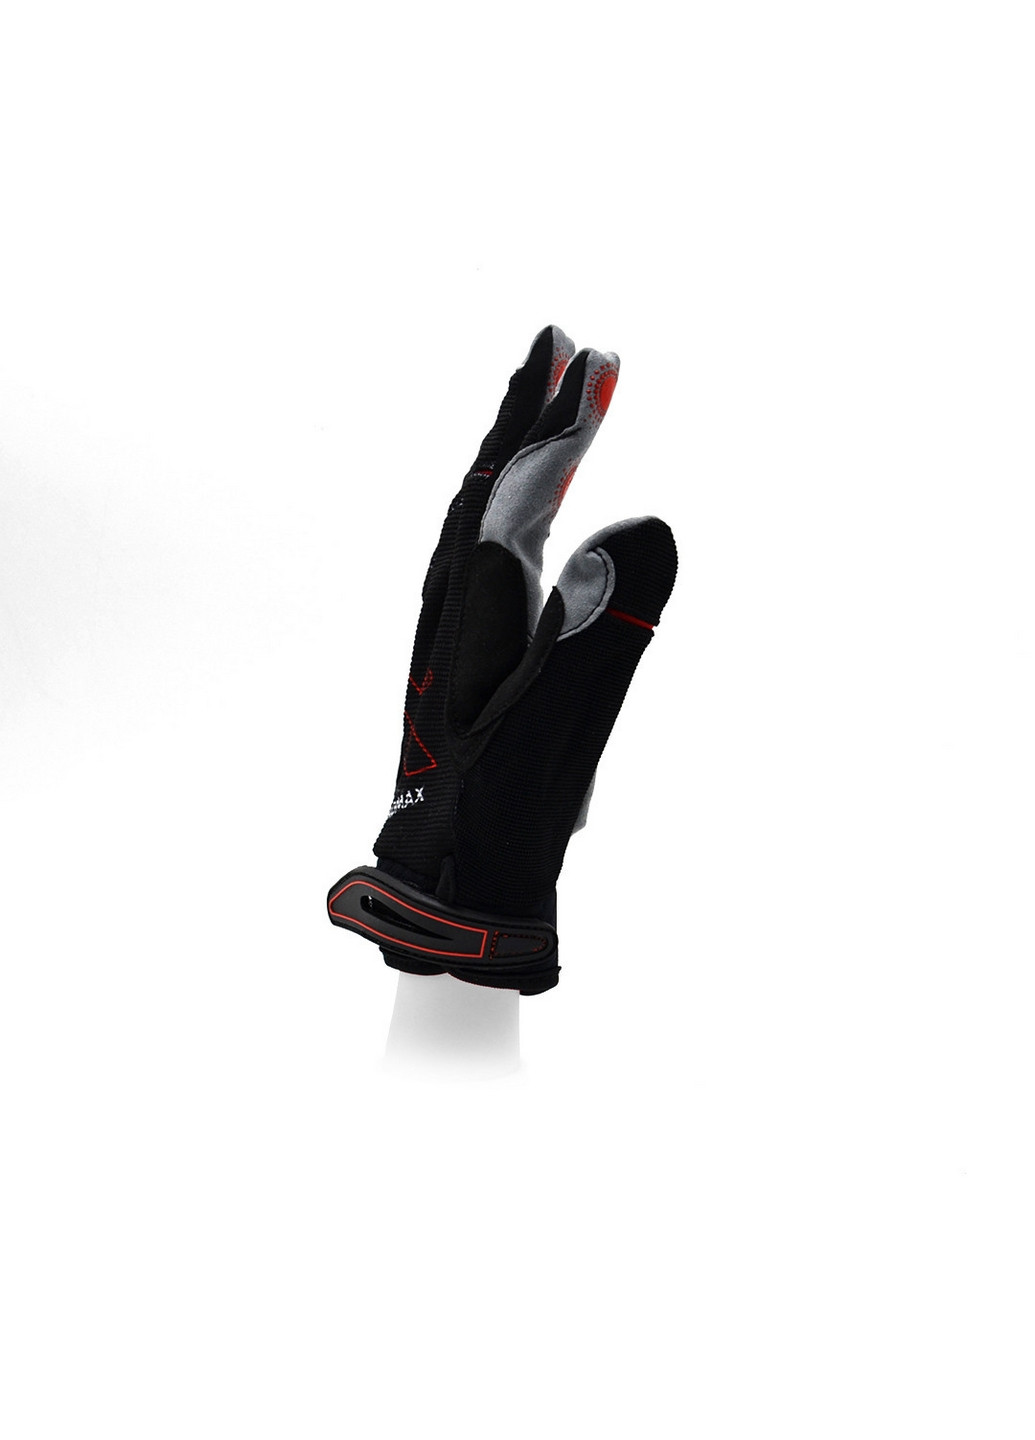 Перчатки для фитнеса Gloves XL Mad Max (263425063)